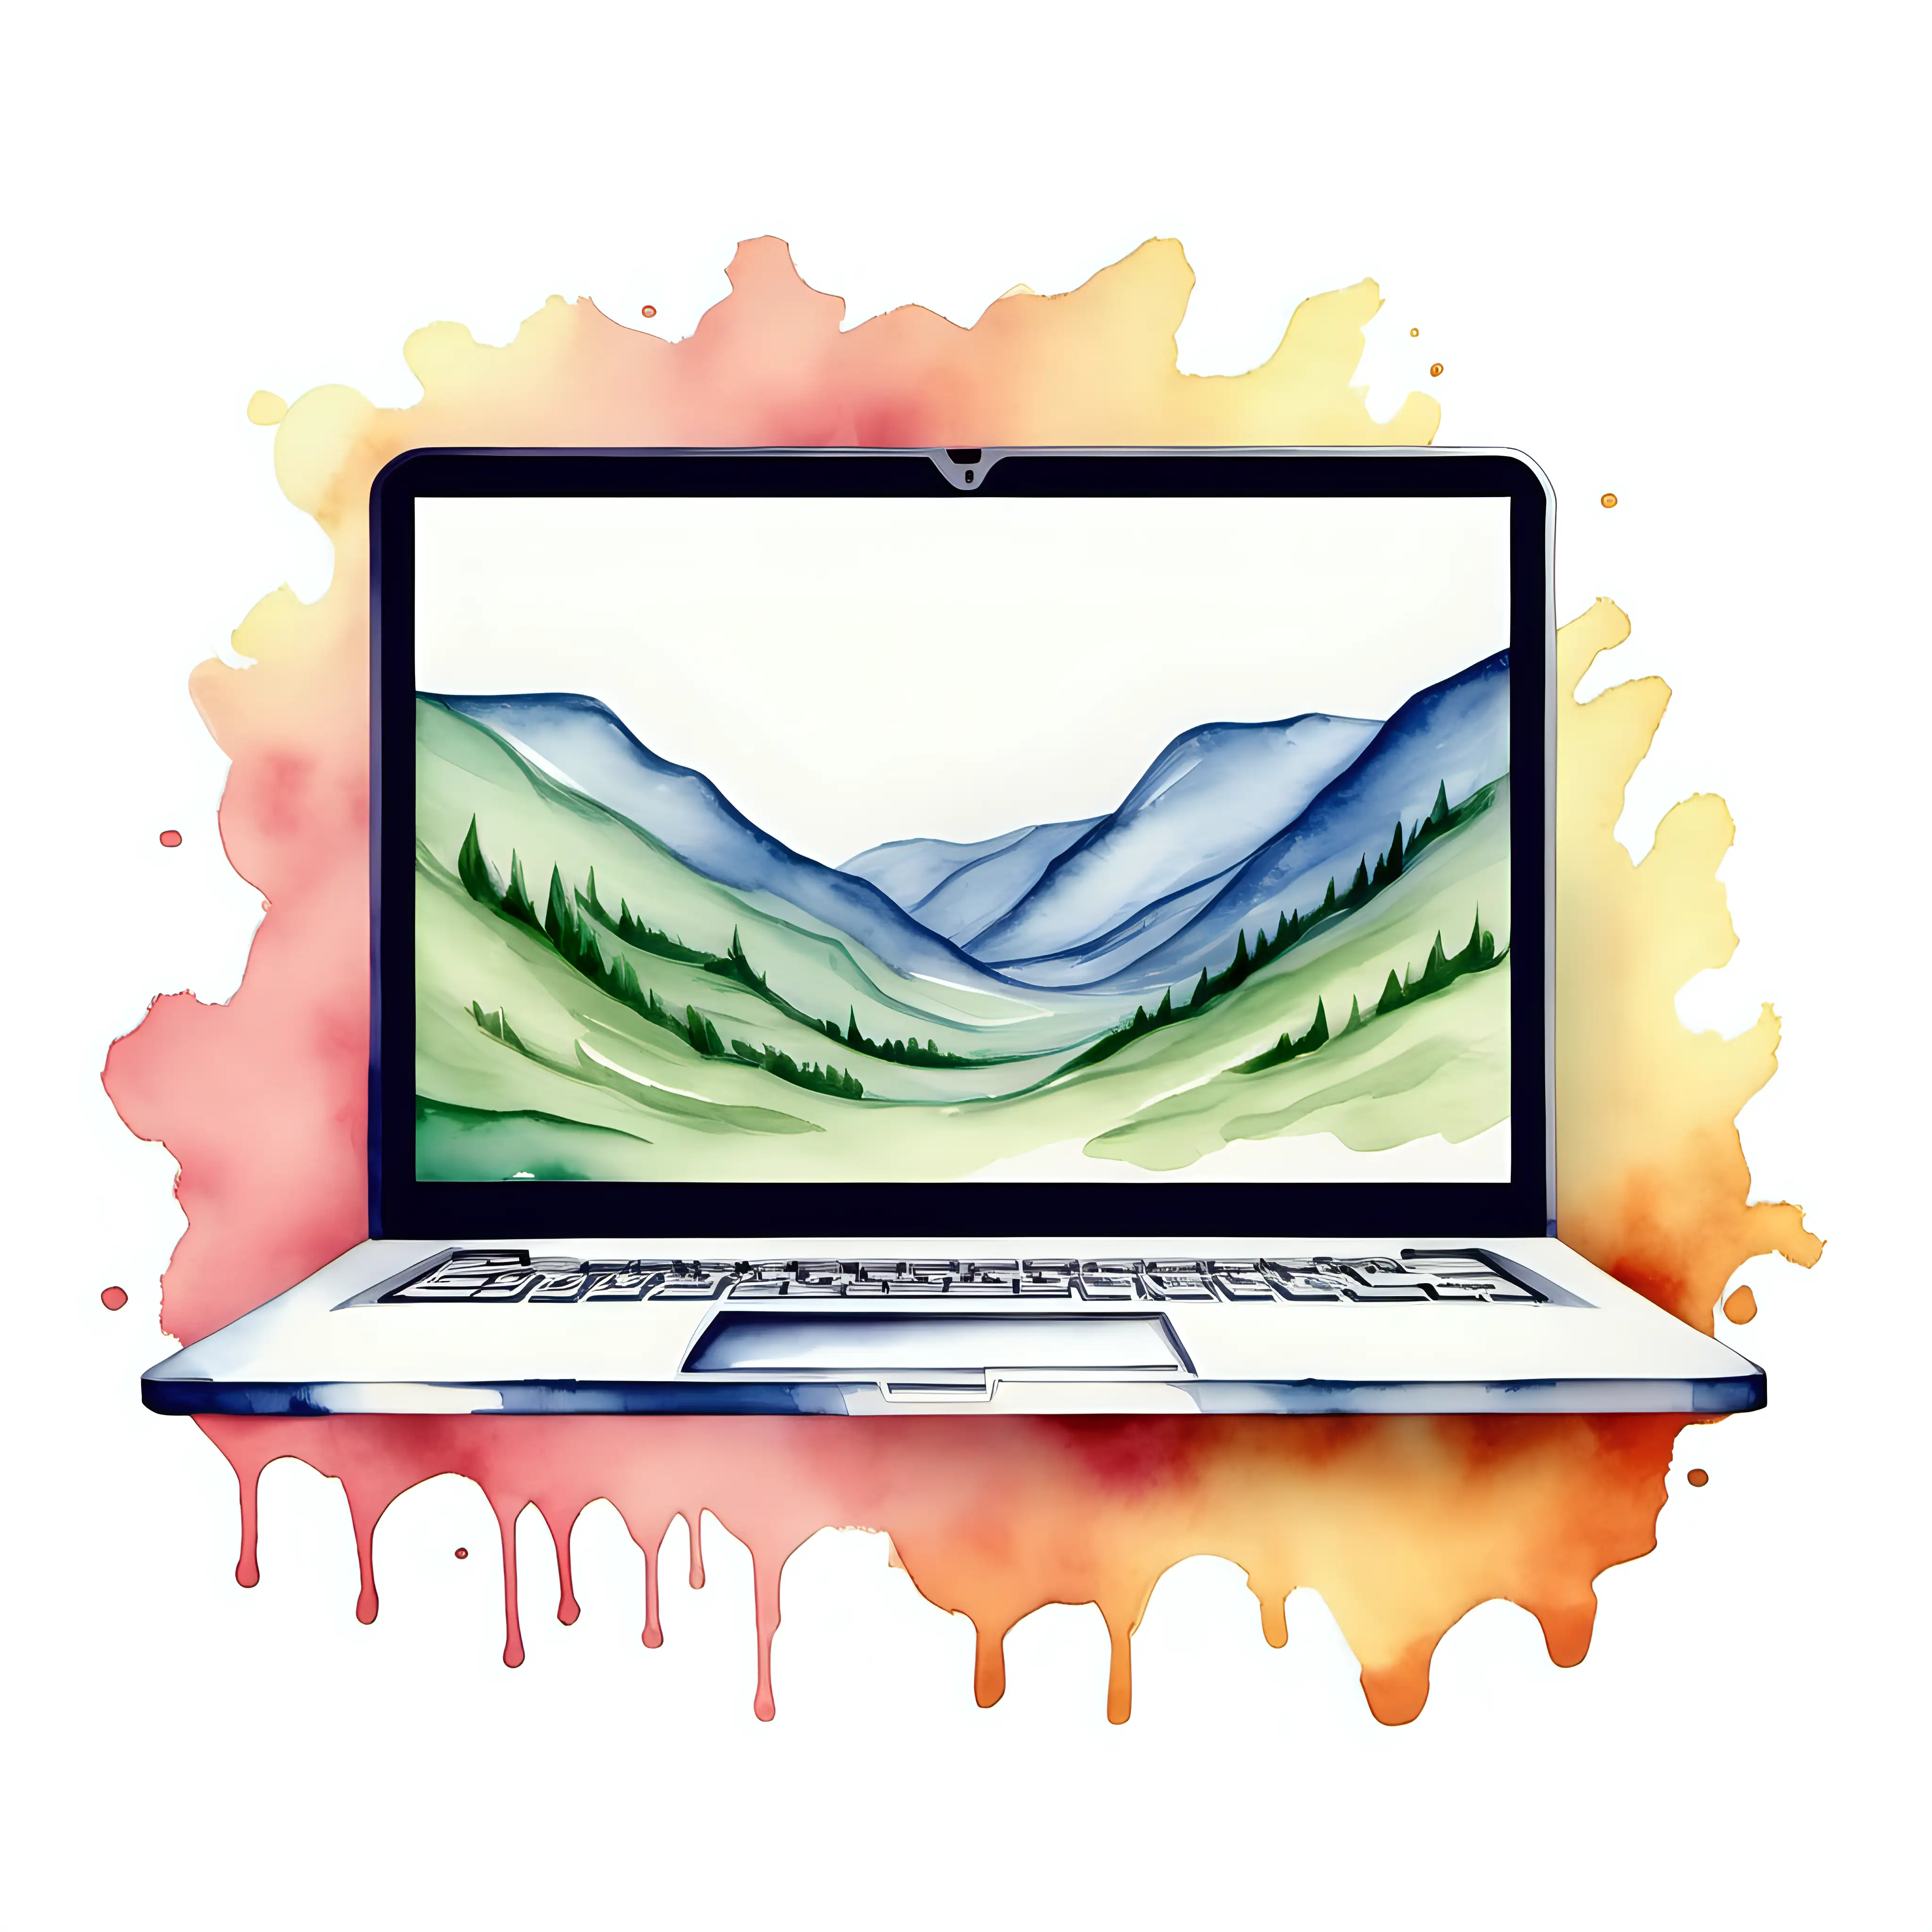 Vibrant Laptop Illustration in Watercolor Creative Technology Art